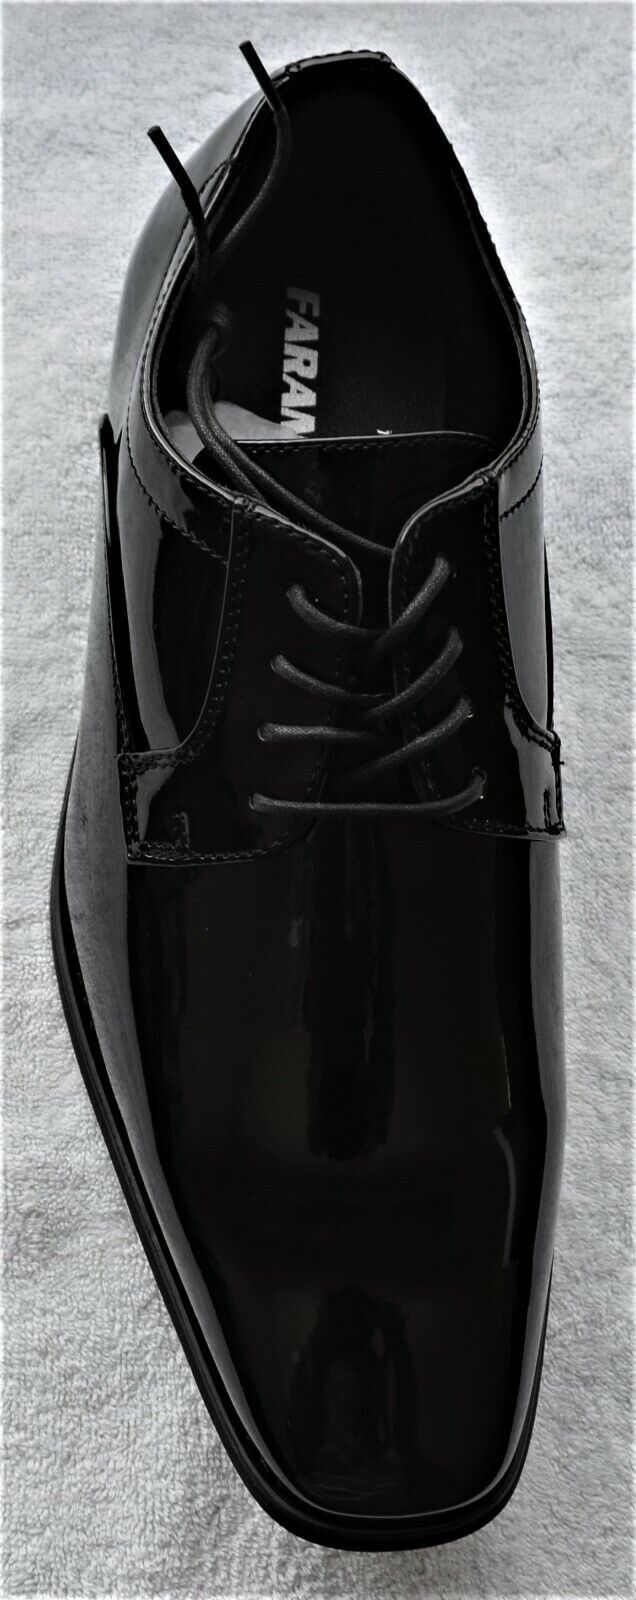 Faranzi Tuxedo Oxford Patent Leather Plain Toe Wedding, Black, Size 10.5